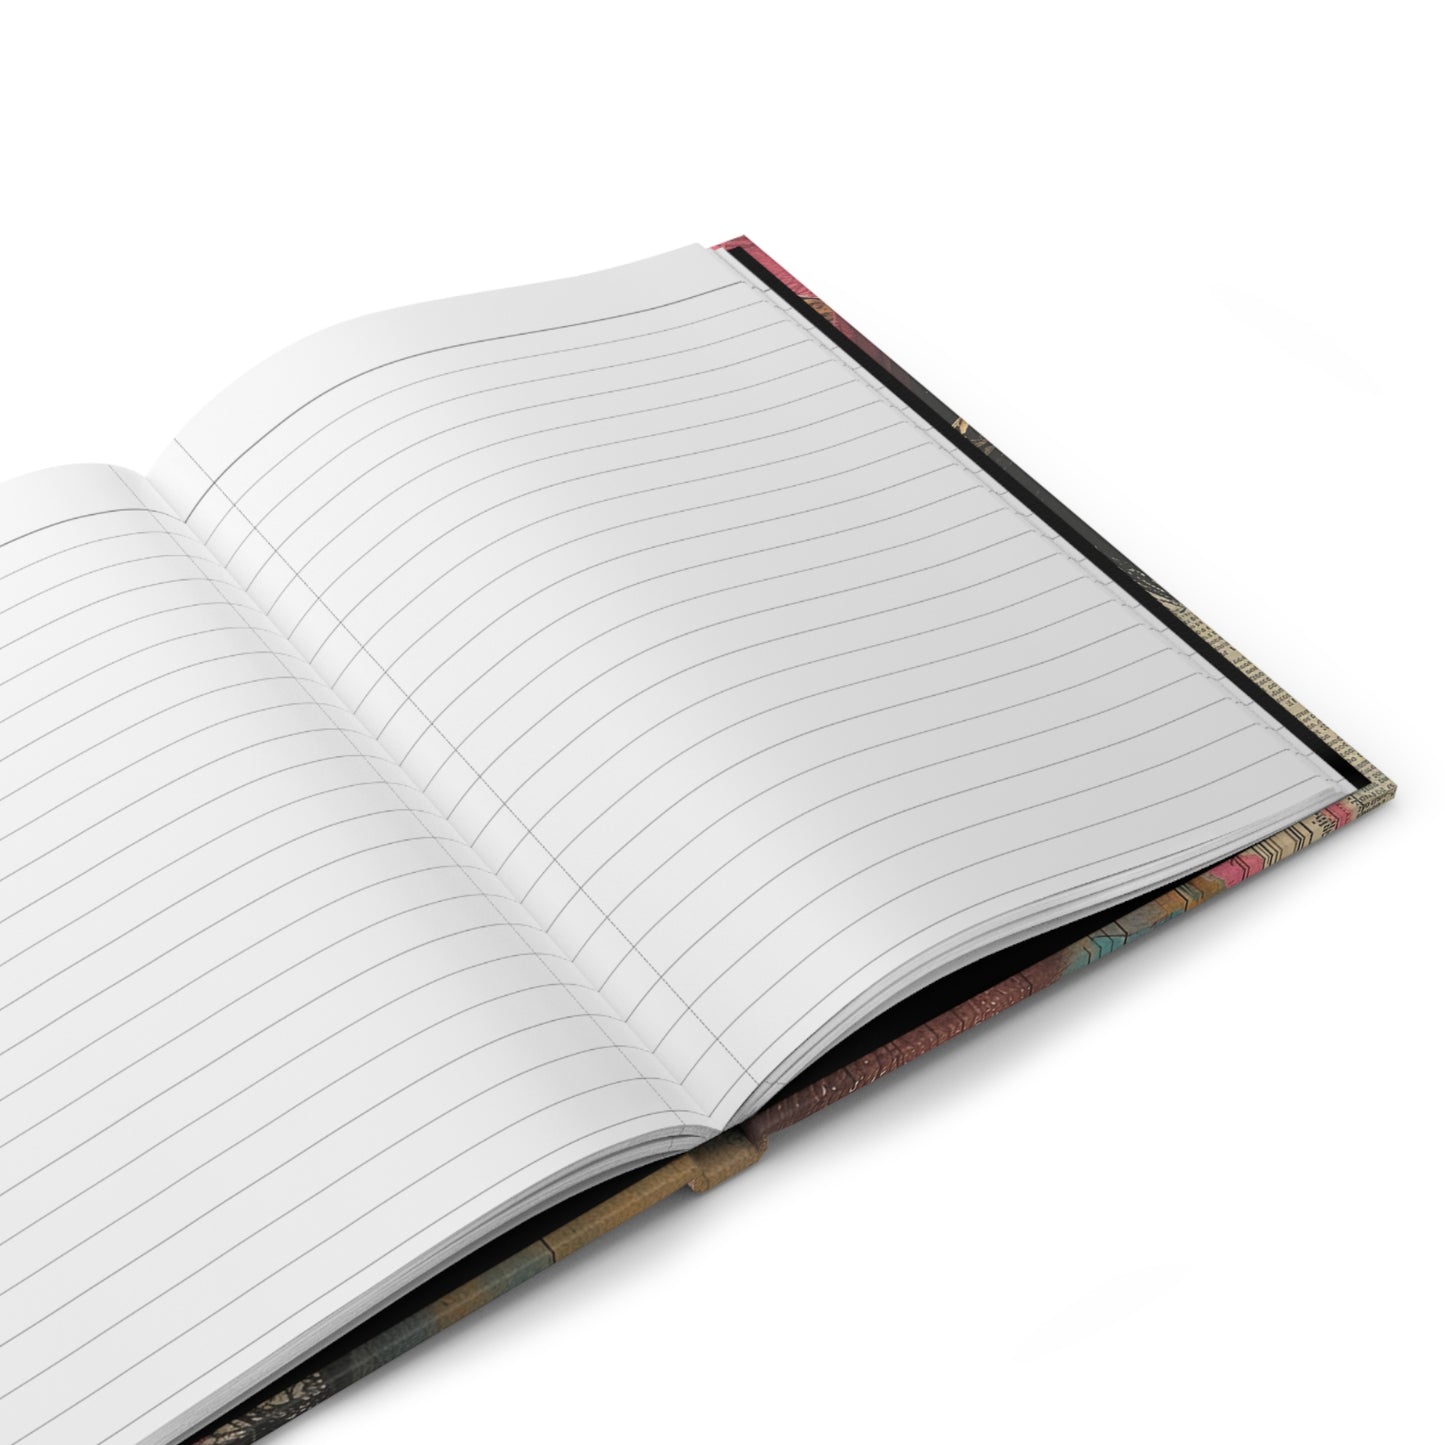 Bloomed Memoir - Hardcover Journal Notebook